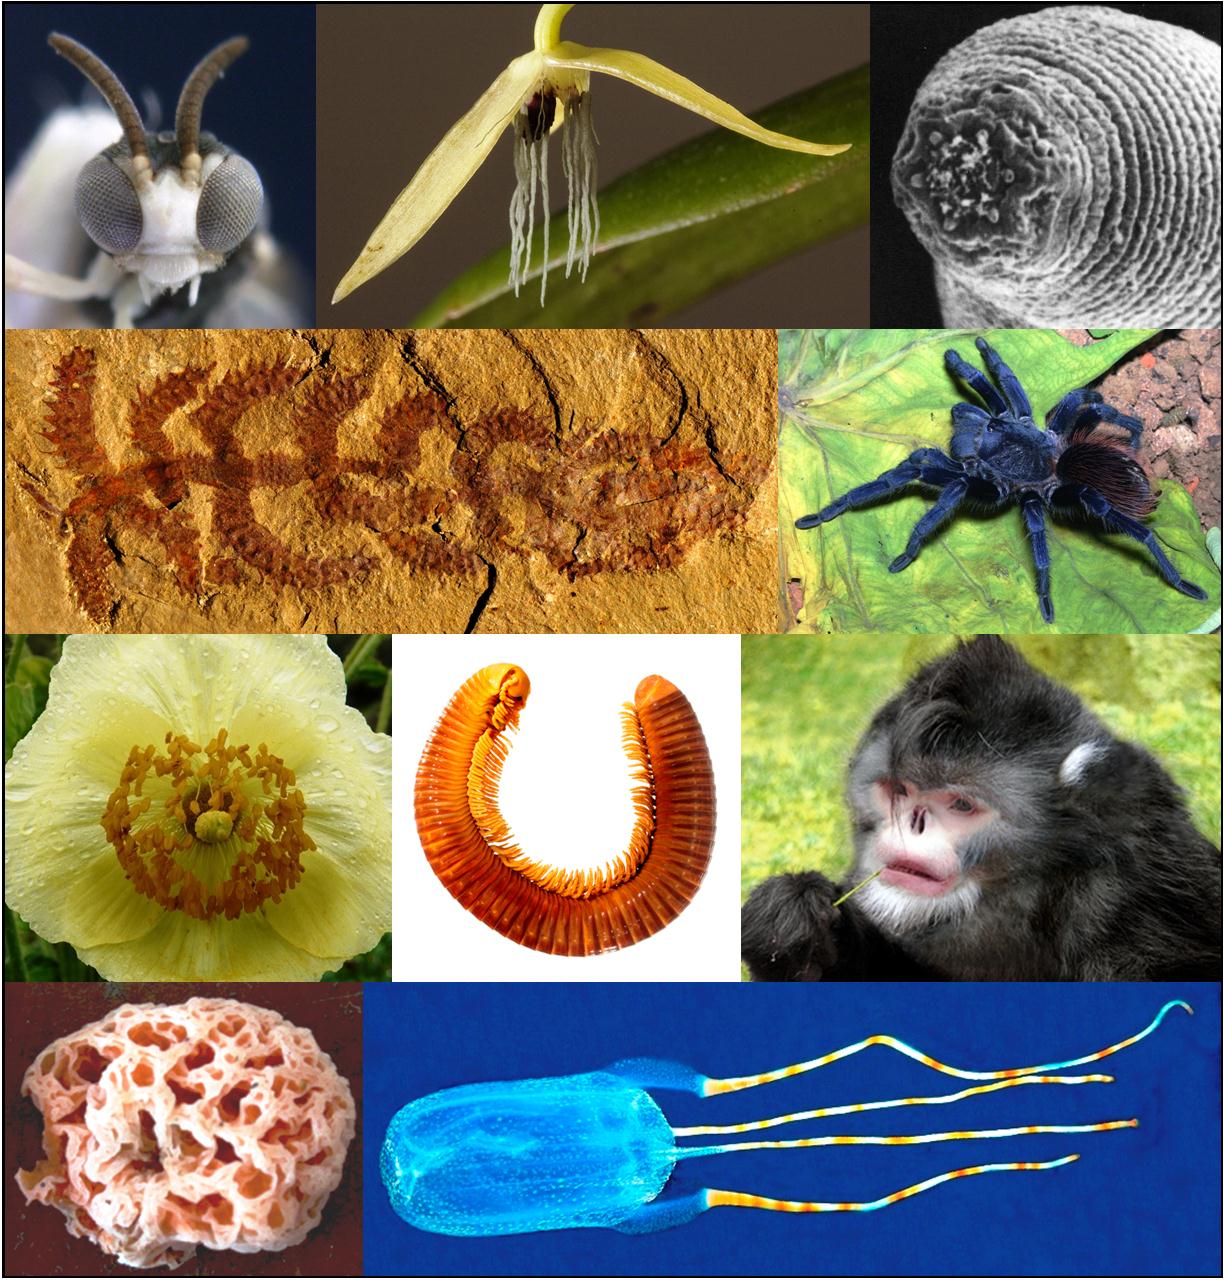 Top 10 new species list draws attention to diverse biosphere | ASU News